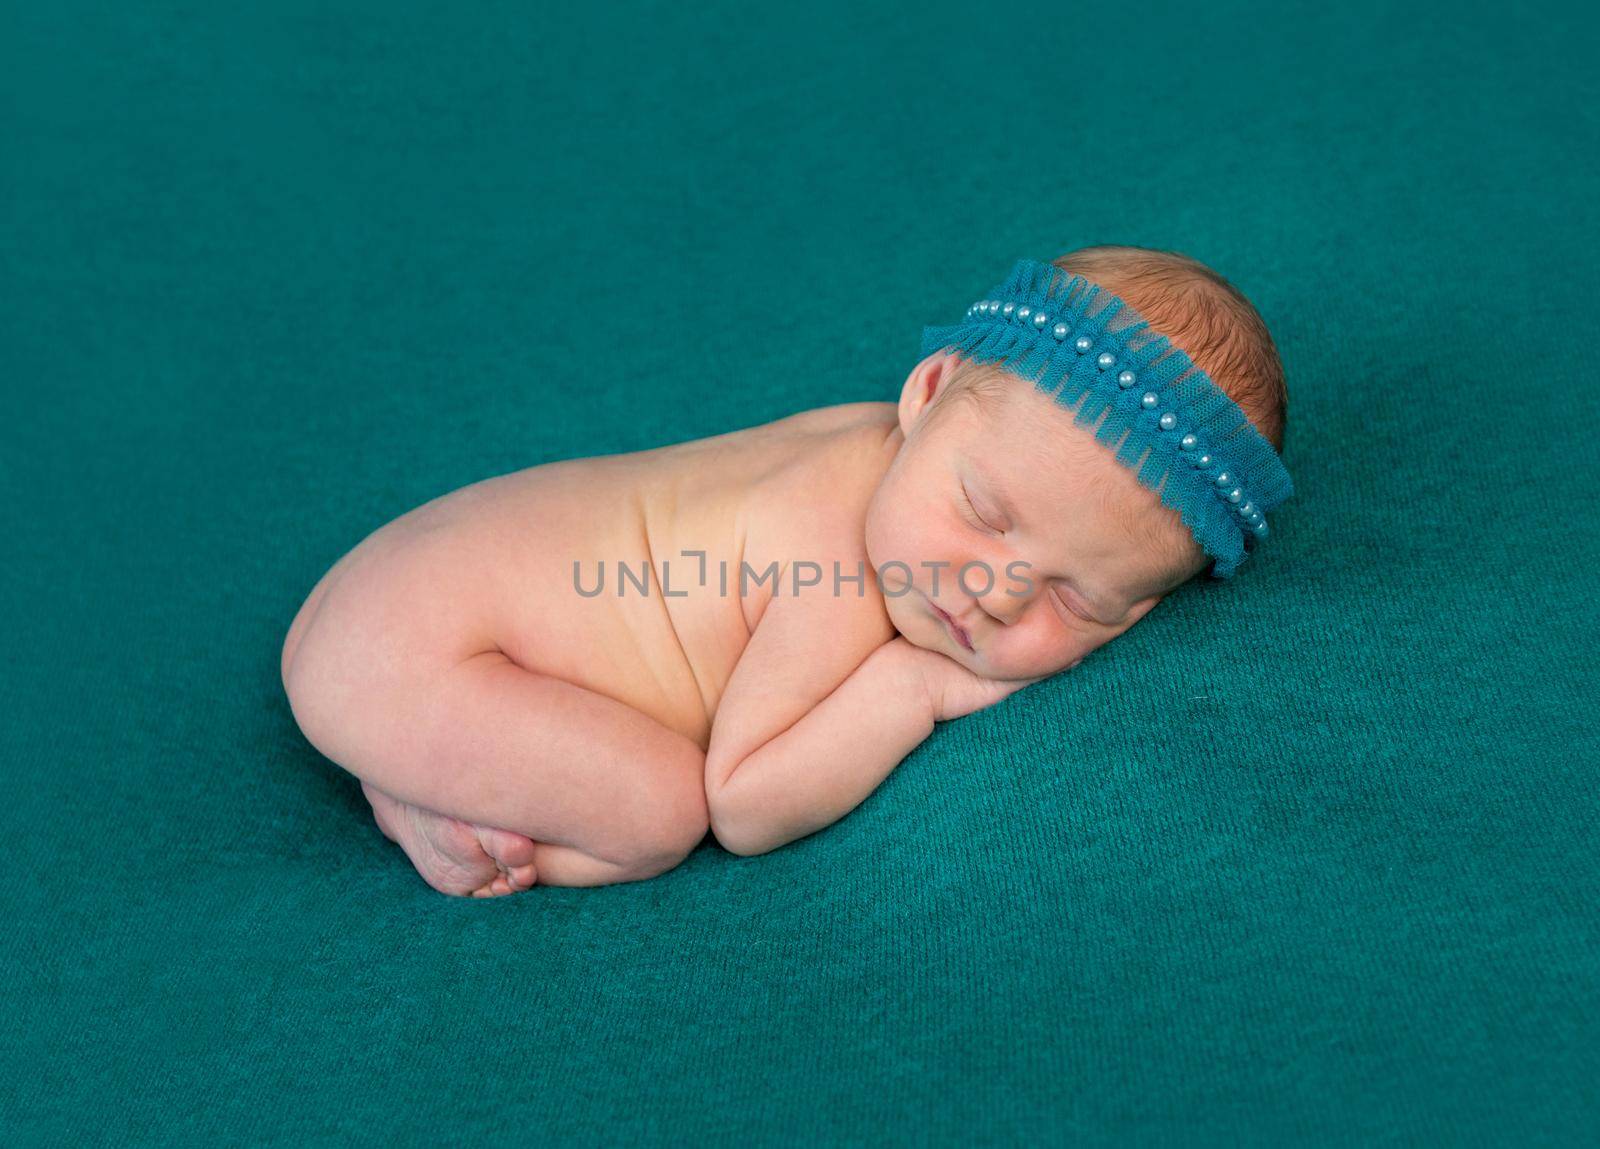 sweet newborn sleeping on stomach and hands with headband by tan4ikk1